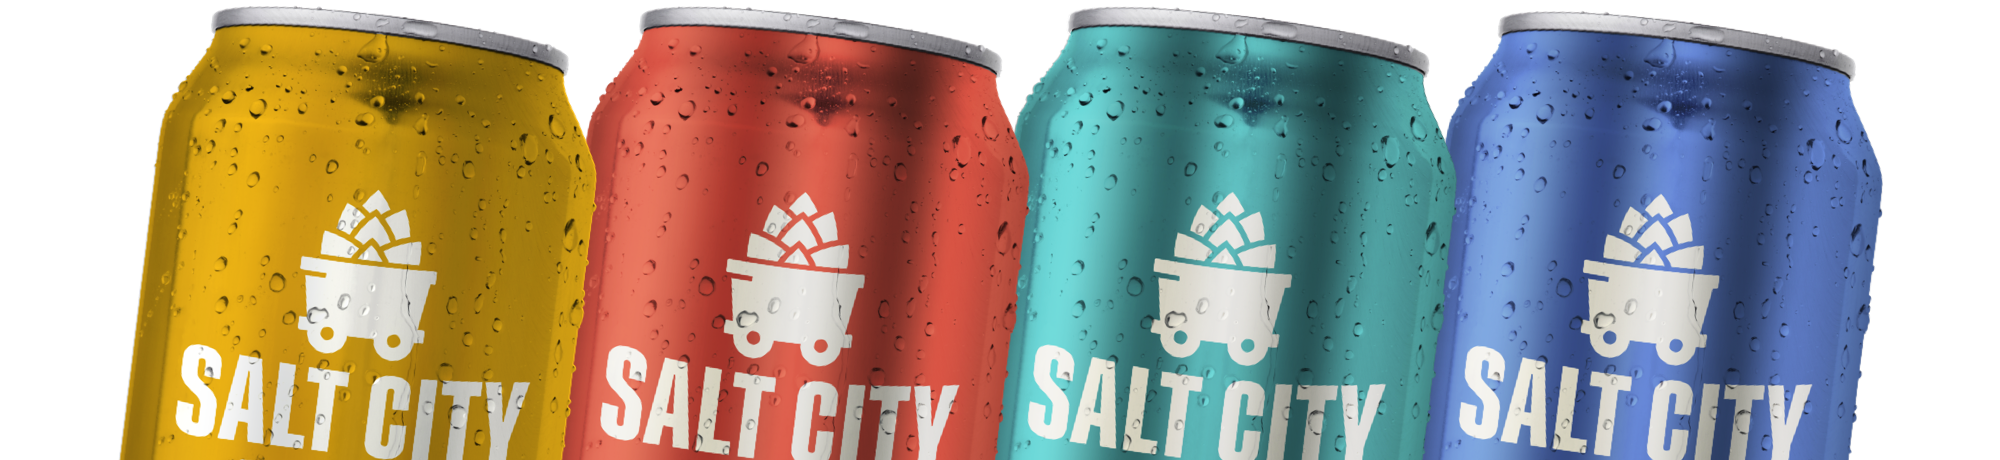 Salt City Brewing Co. flagship beers